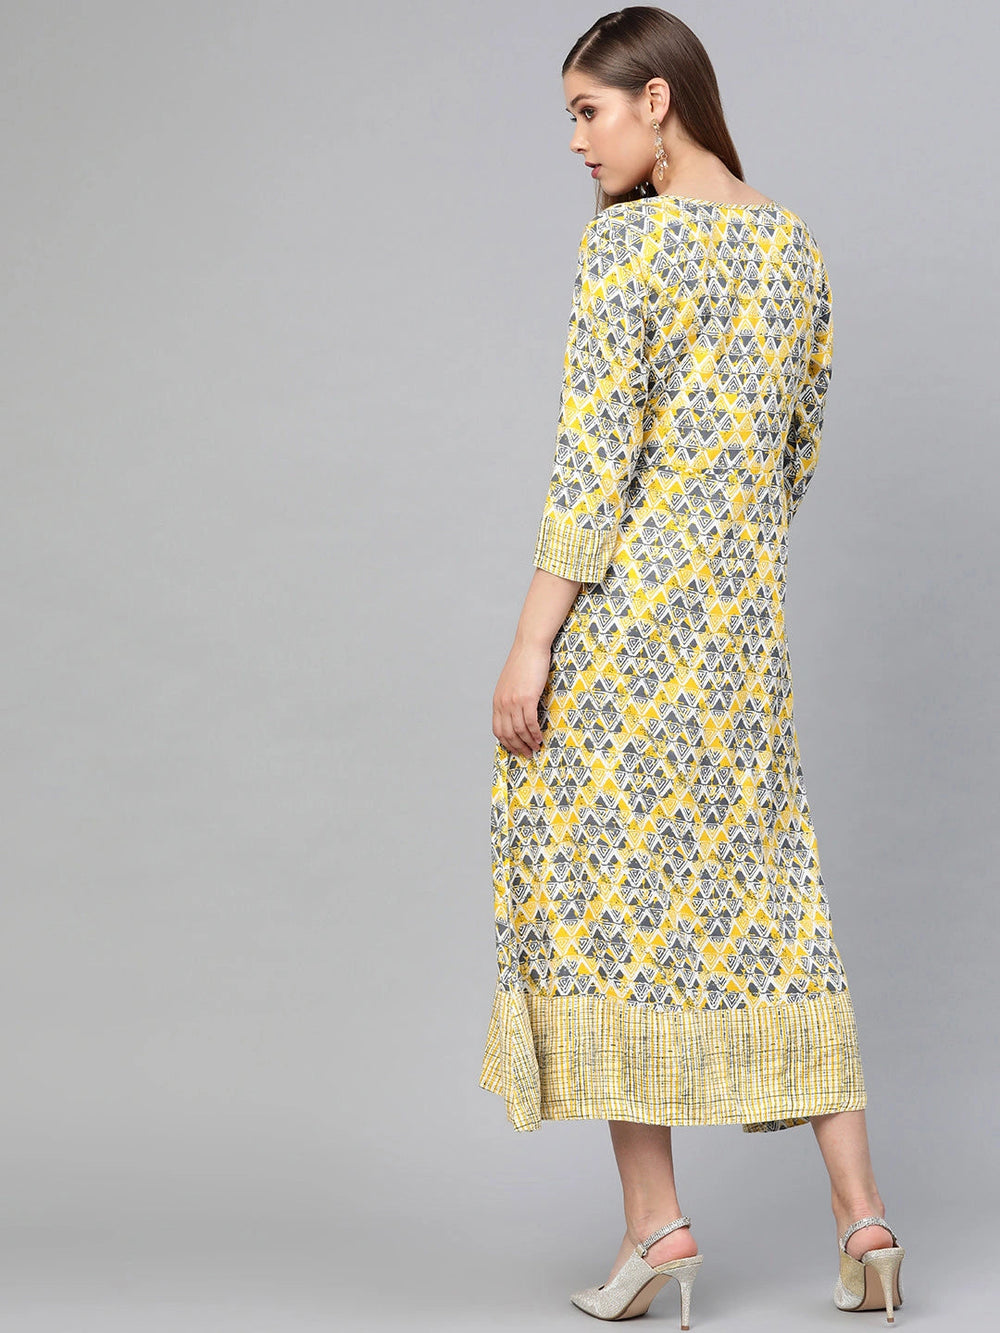 Yellow & Beige Printed Dress-Yufta Store-1670BDRSBGS